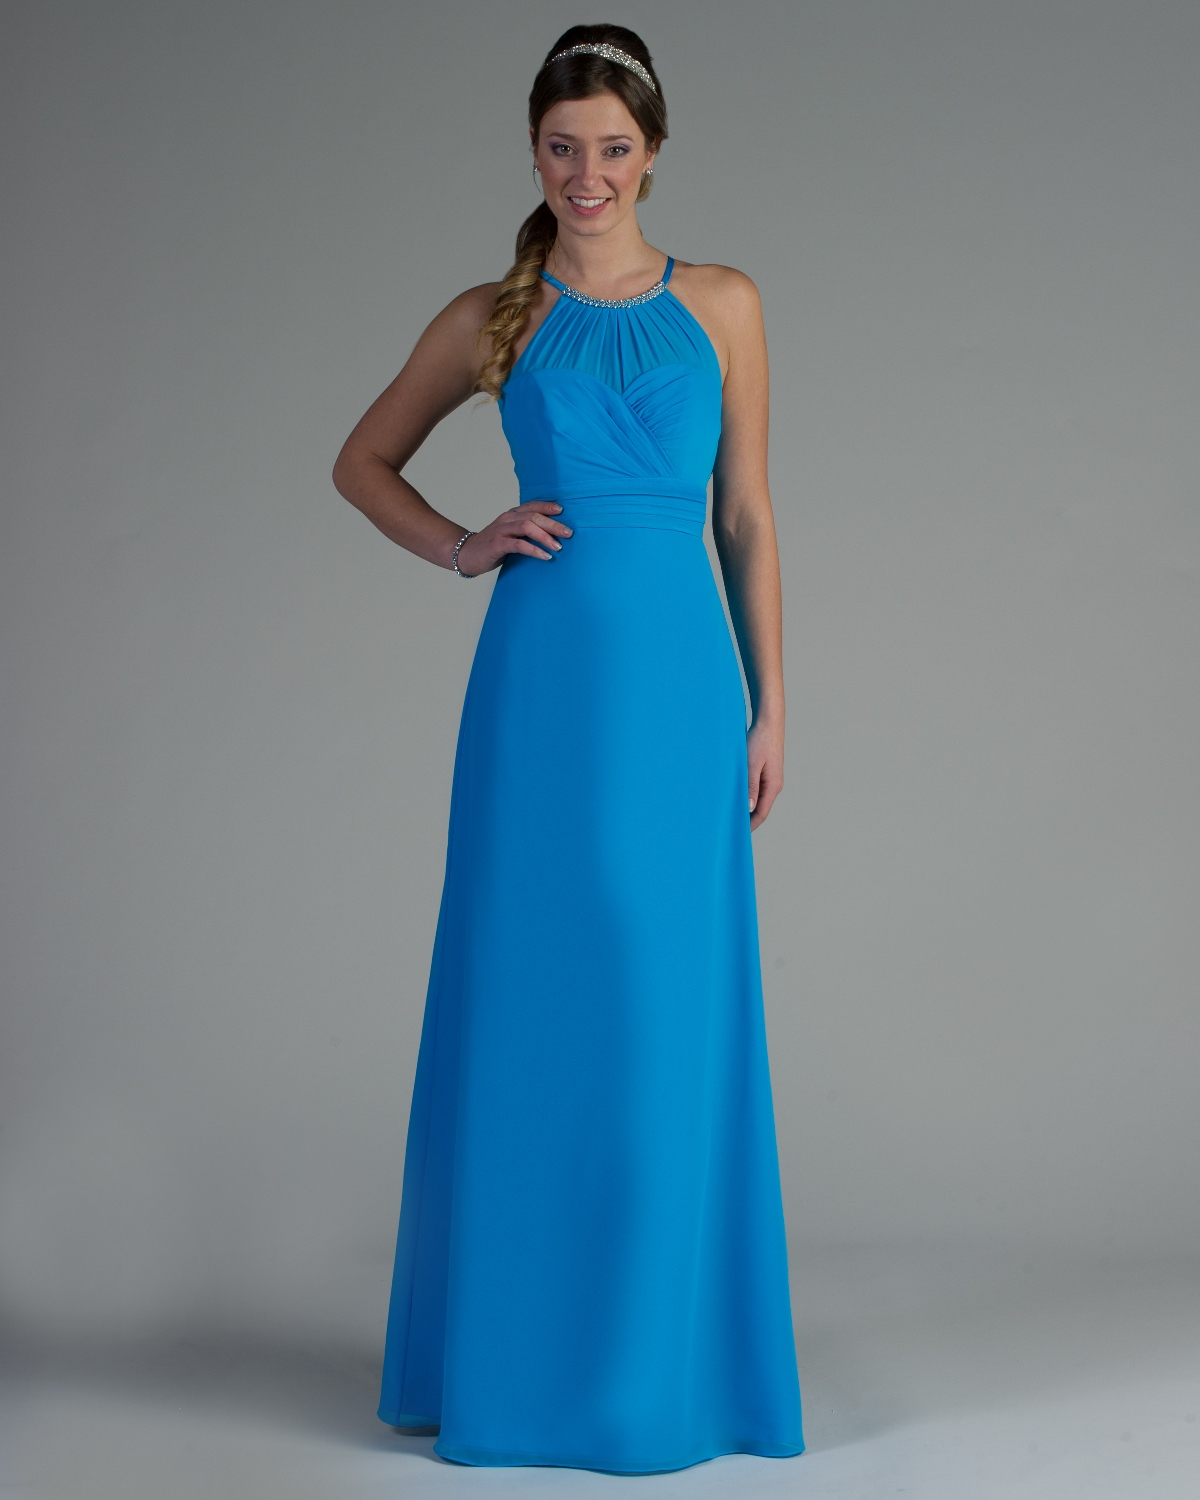 Dress - Tutto Bene Collection: 2202 - Shown in Blue chiffon | TuttoBene ...